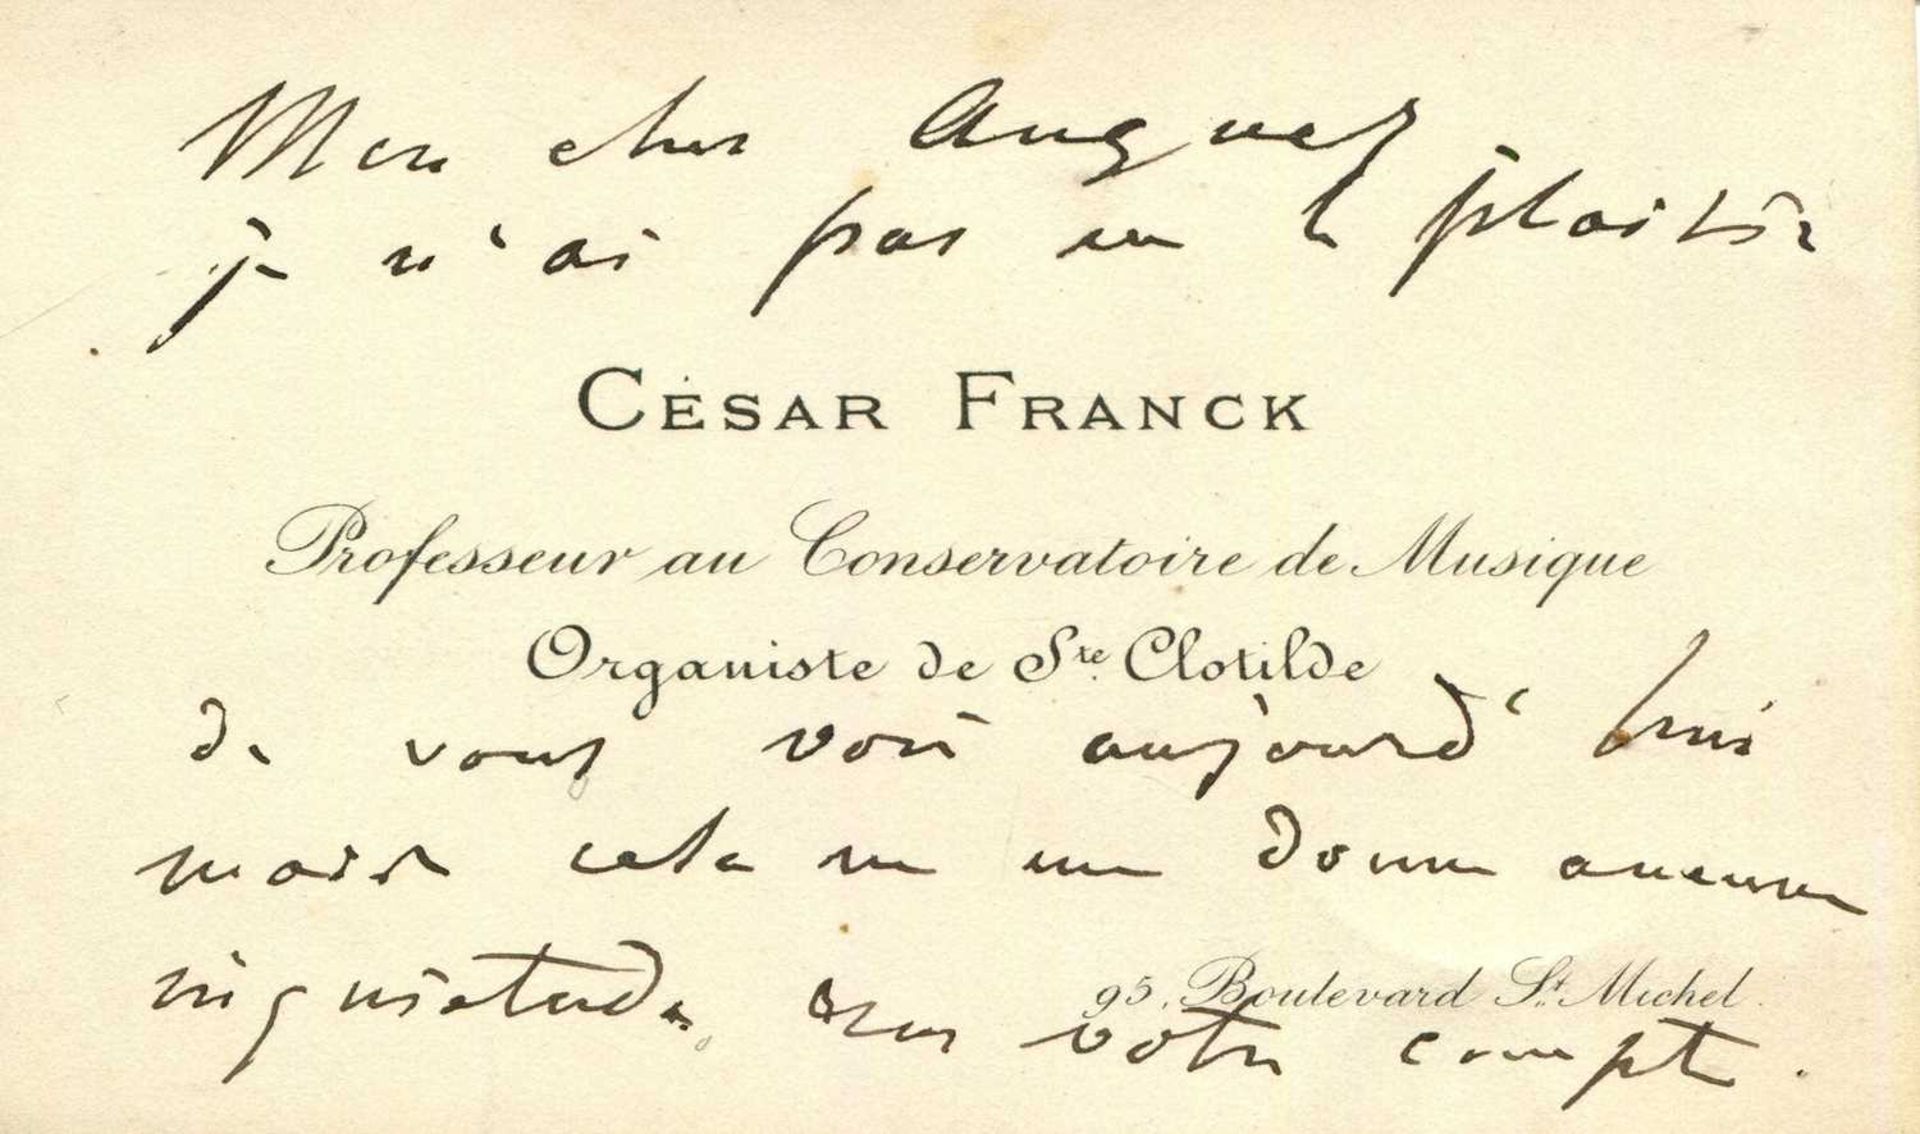 FRANCK CESAR: (1822-1890)